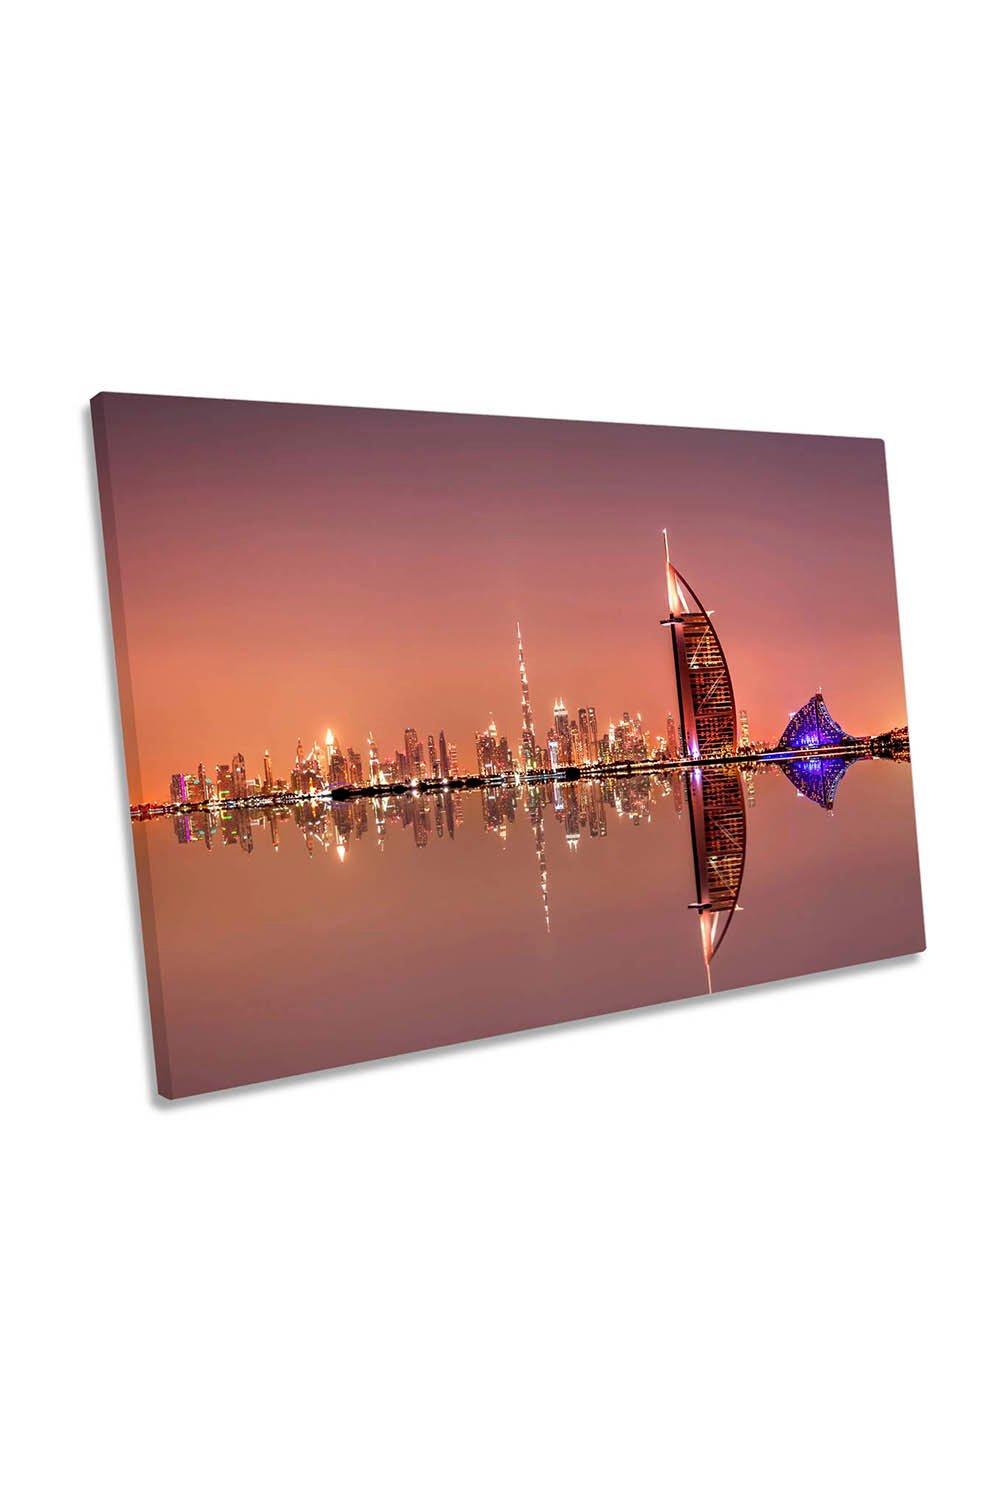 Night Colour of Dubai City Canvas Wall Art Picture Print